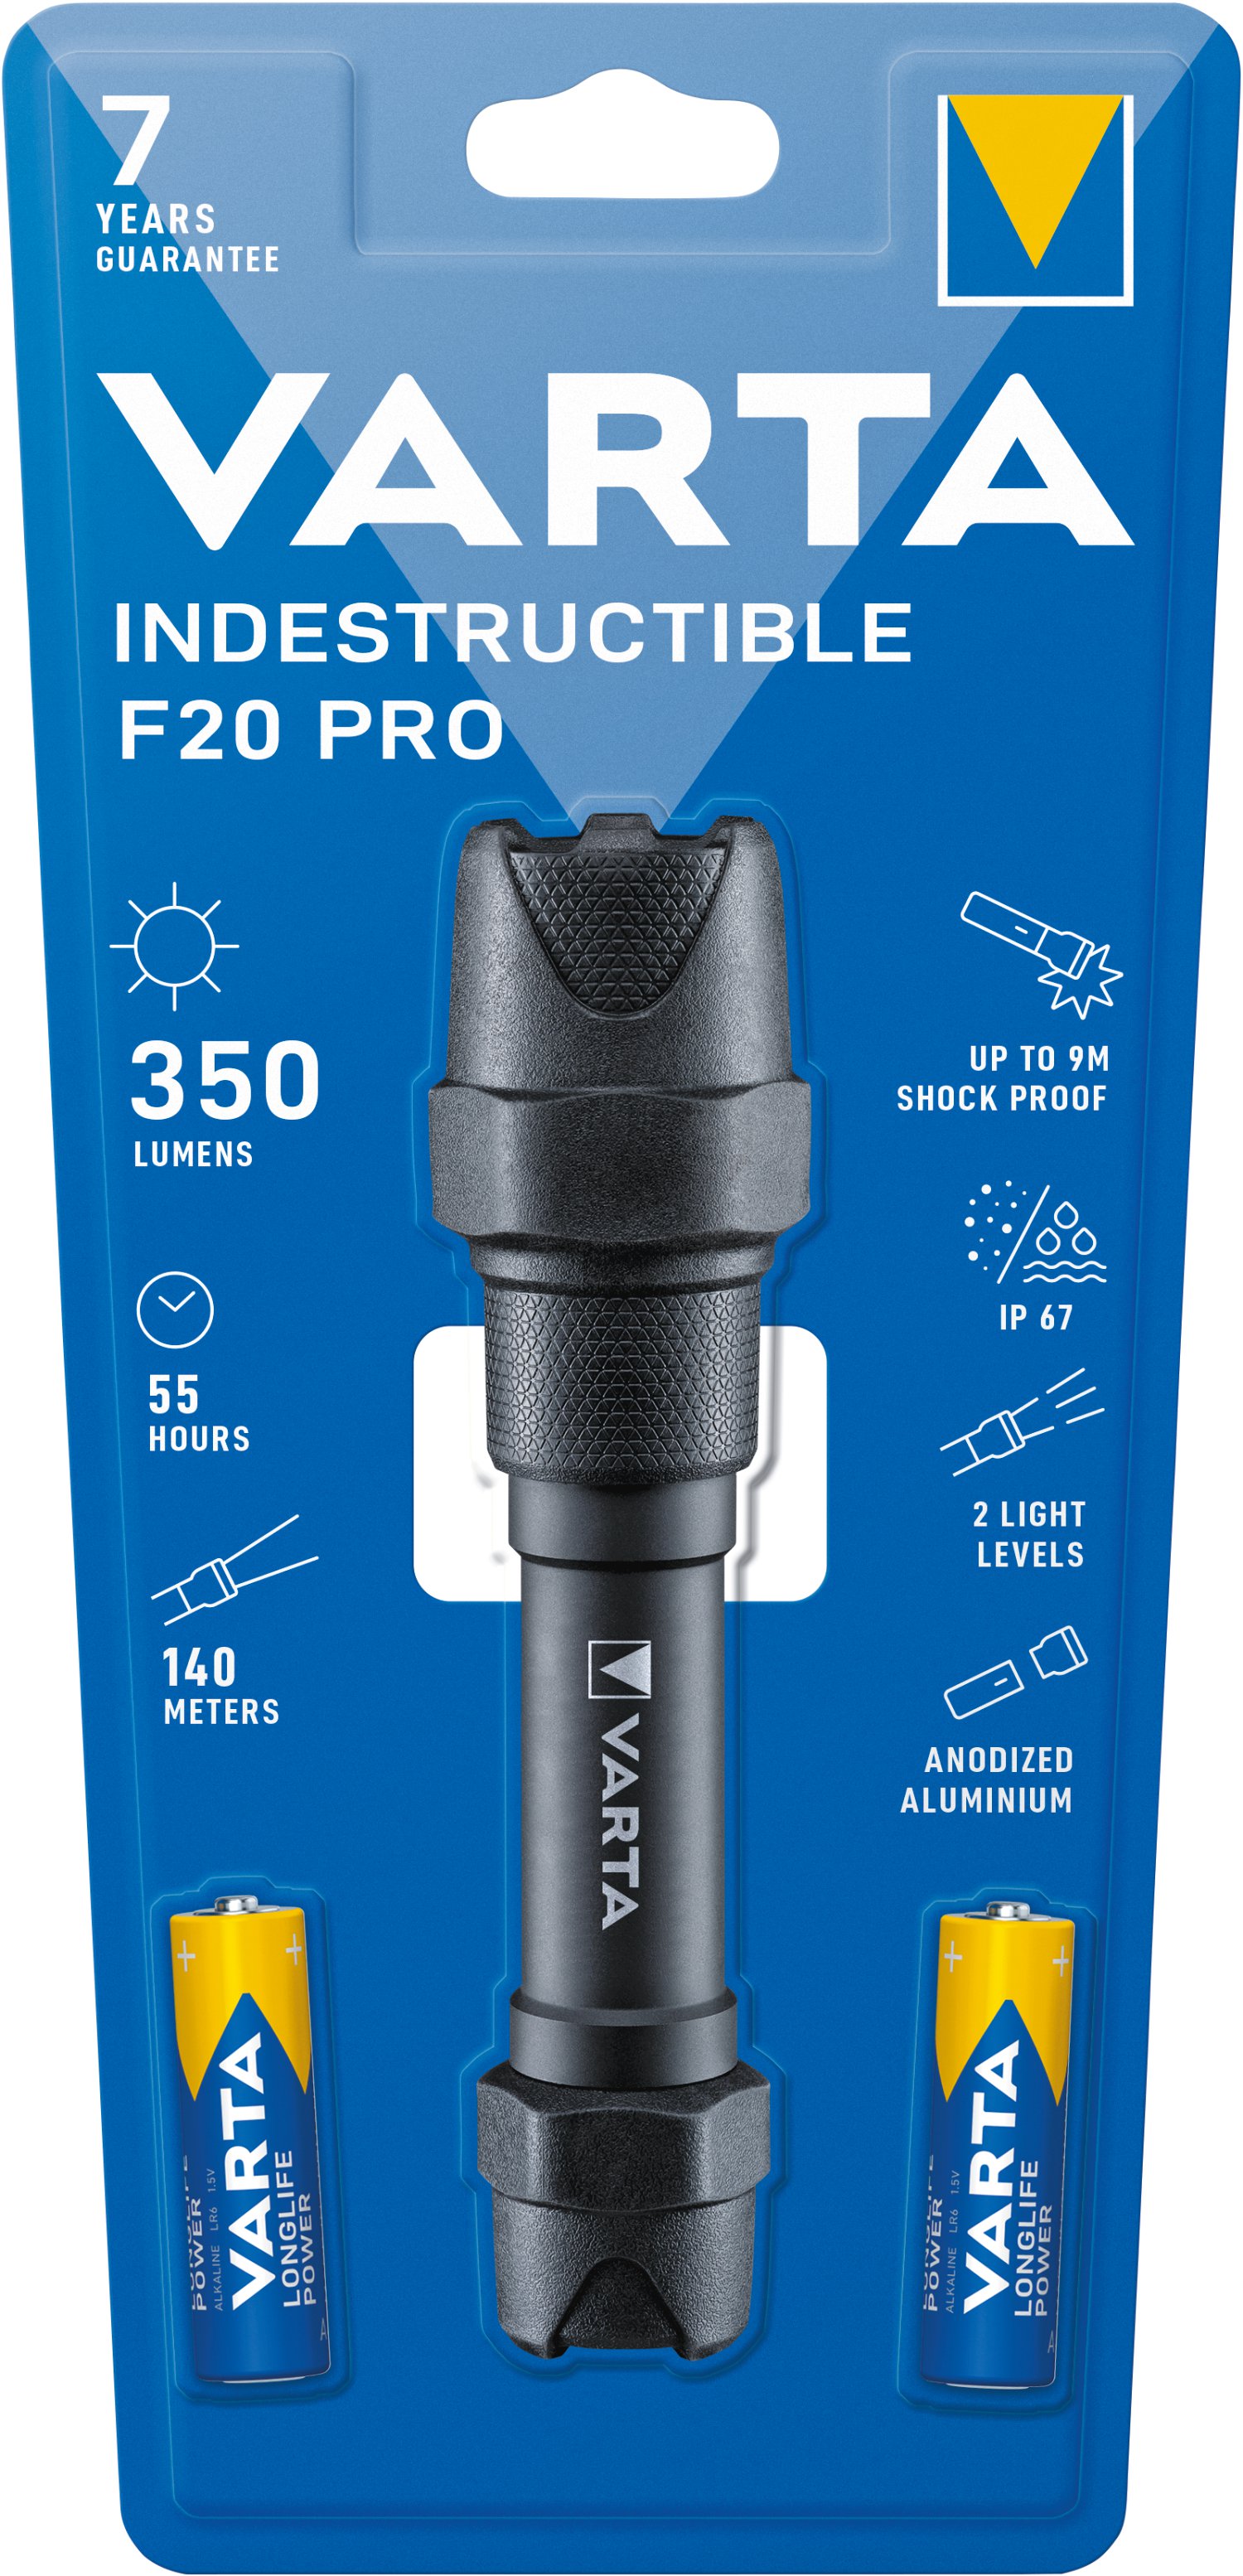 VARTA LED-Taschenlampe Indestructible F20 Pro inkl. 2x VARTA Longlife Power AA Batterie